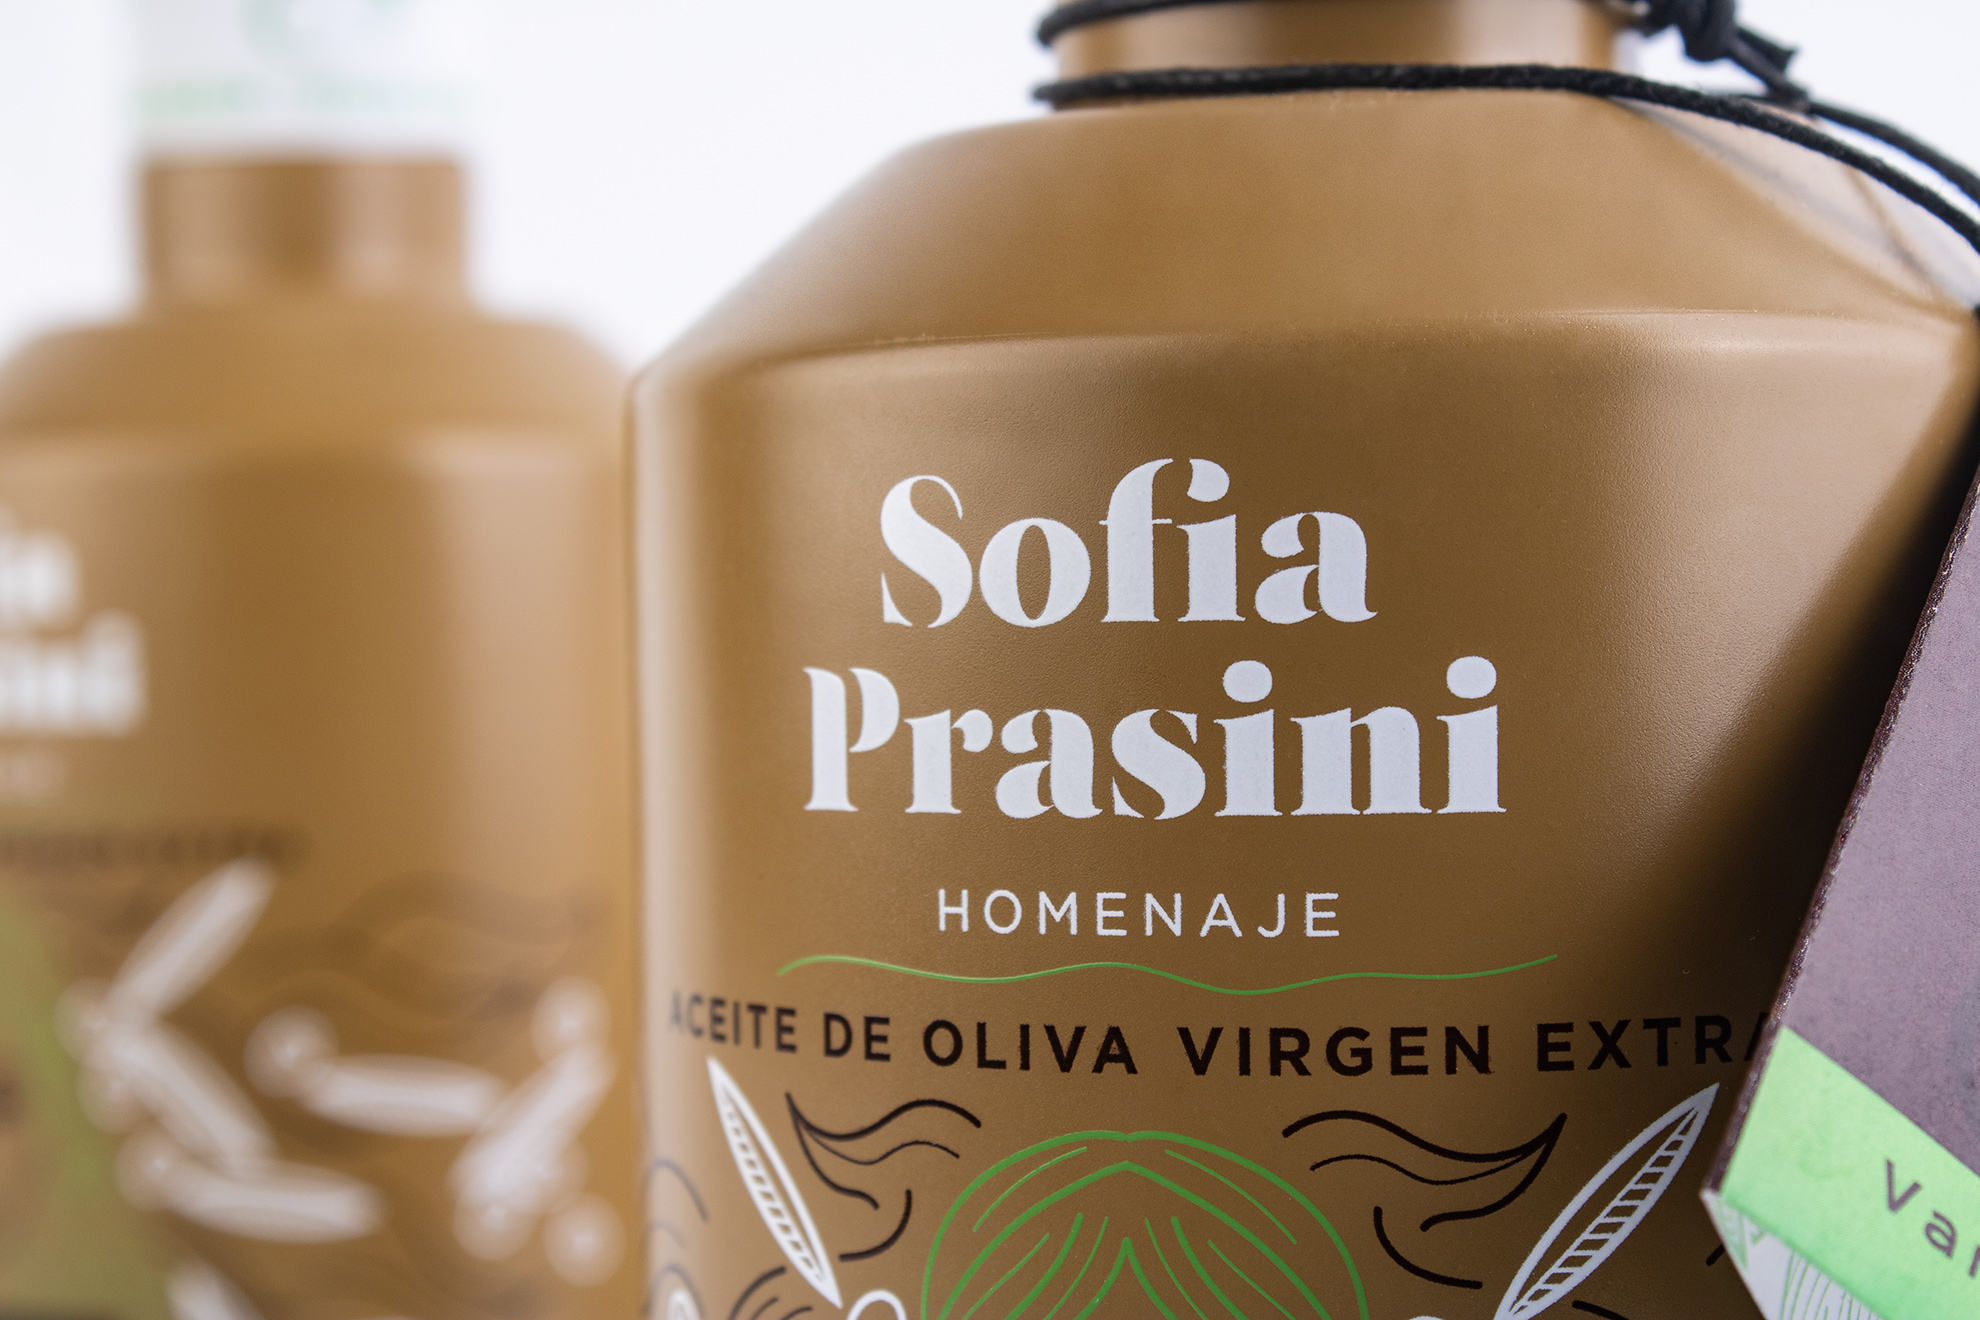 Sofia_Prasini_brand_para_aceite_de_oliva